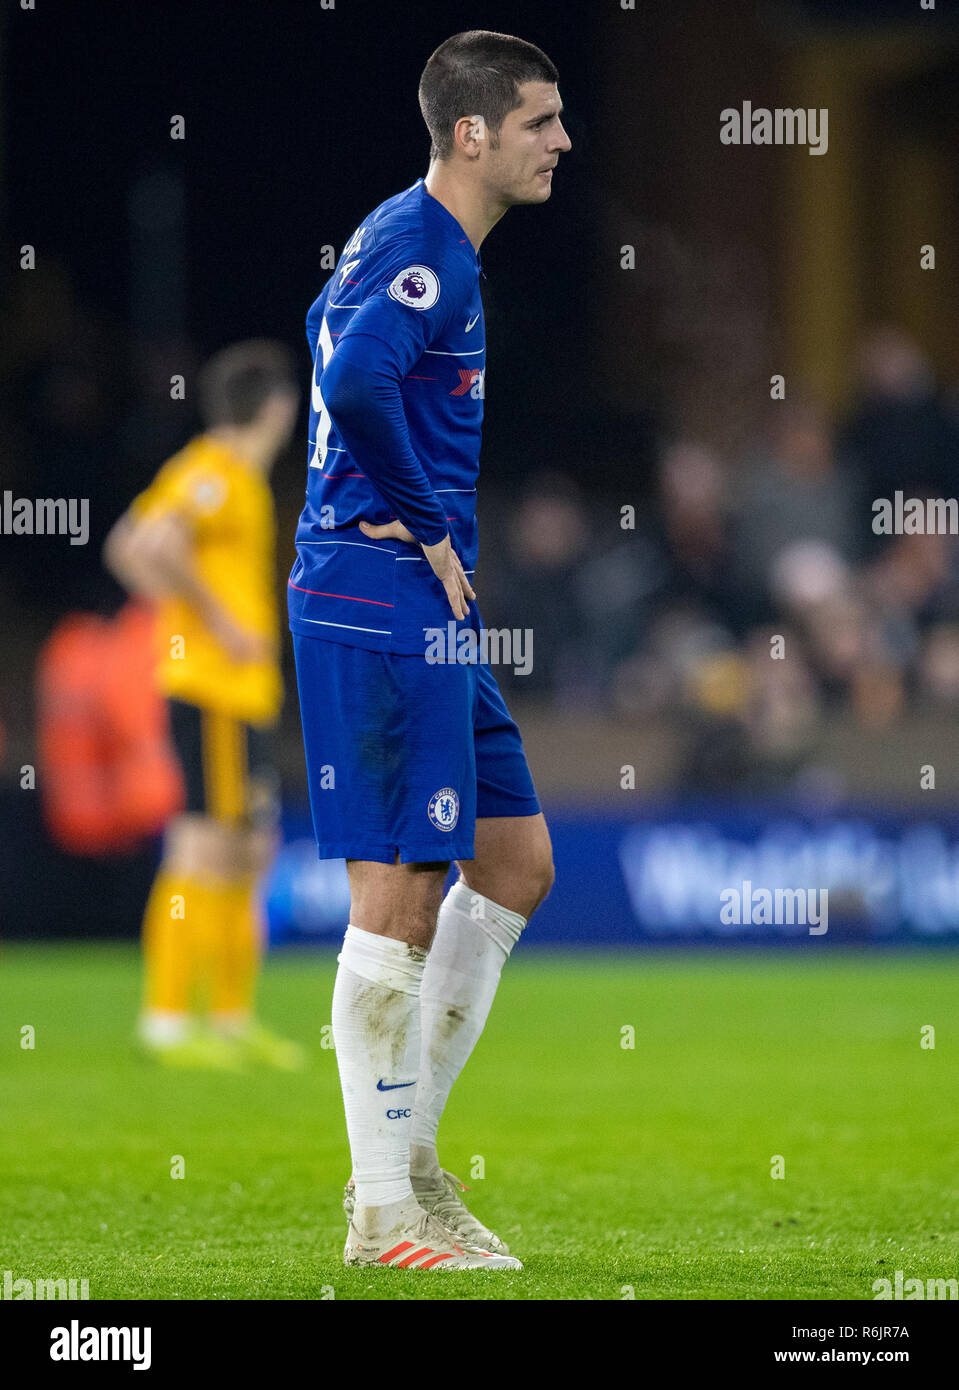 Wolverhampton, UK. 5th Dec, 2018. Alvaro MORATA of Chelsea wears the Adidas boots of teammate Cesar Azpilicueta of Chelsea displaying CARLOTA during the Premier League match between Wanderers and